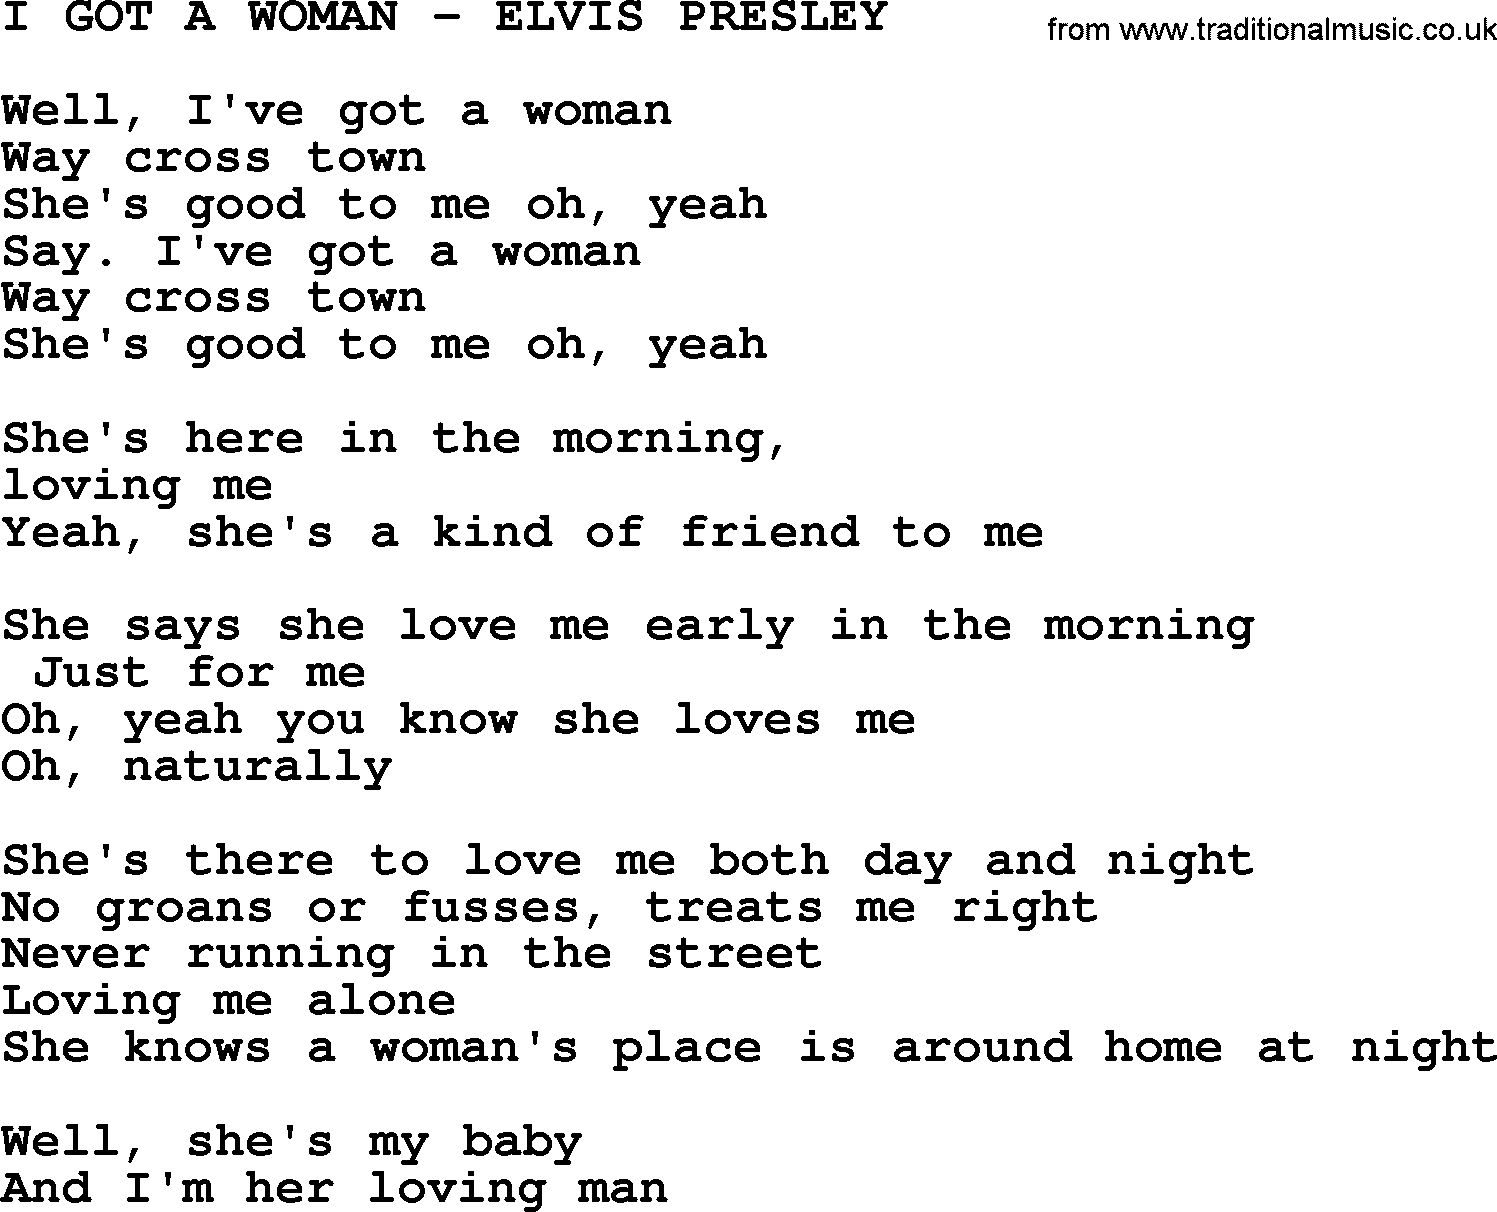 Elvis Presley song: I Got A Woman-Elvis Presley-.txt lyrics and chords